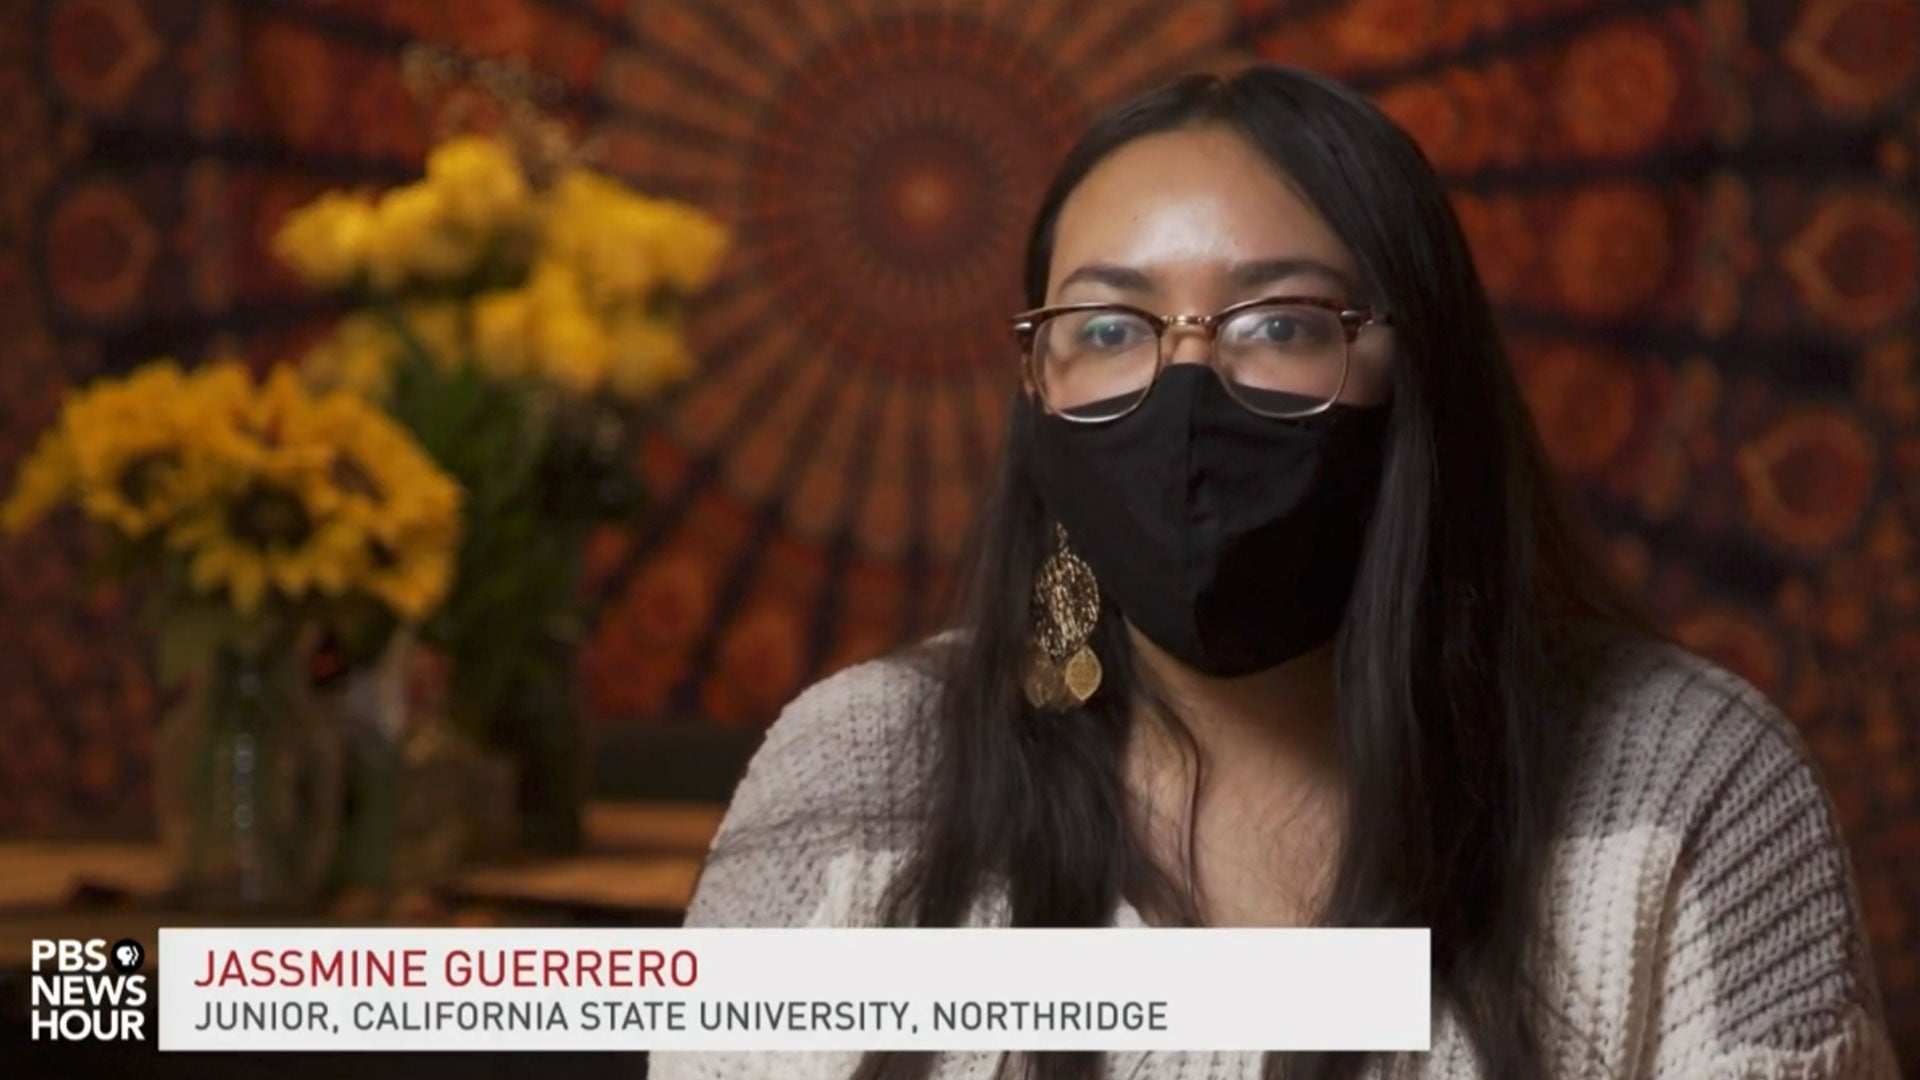 Still from PBS NewsHour broadcast featuring Jassmine Guerrero